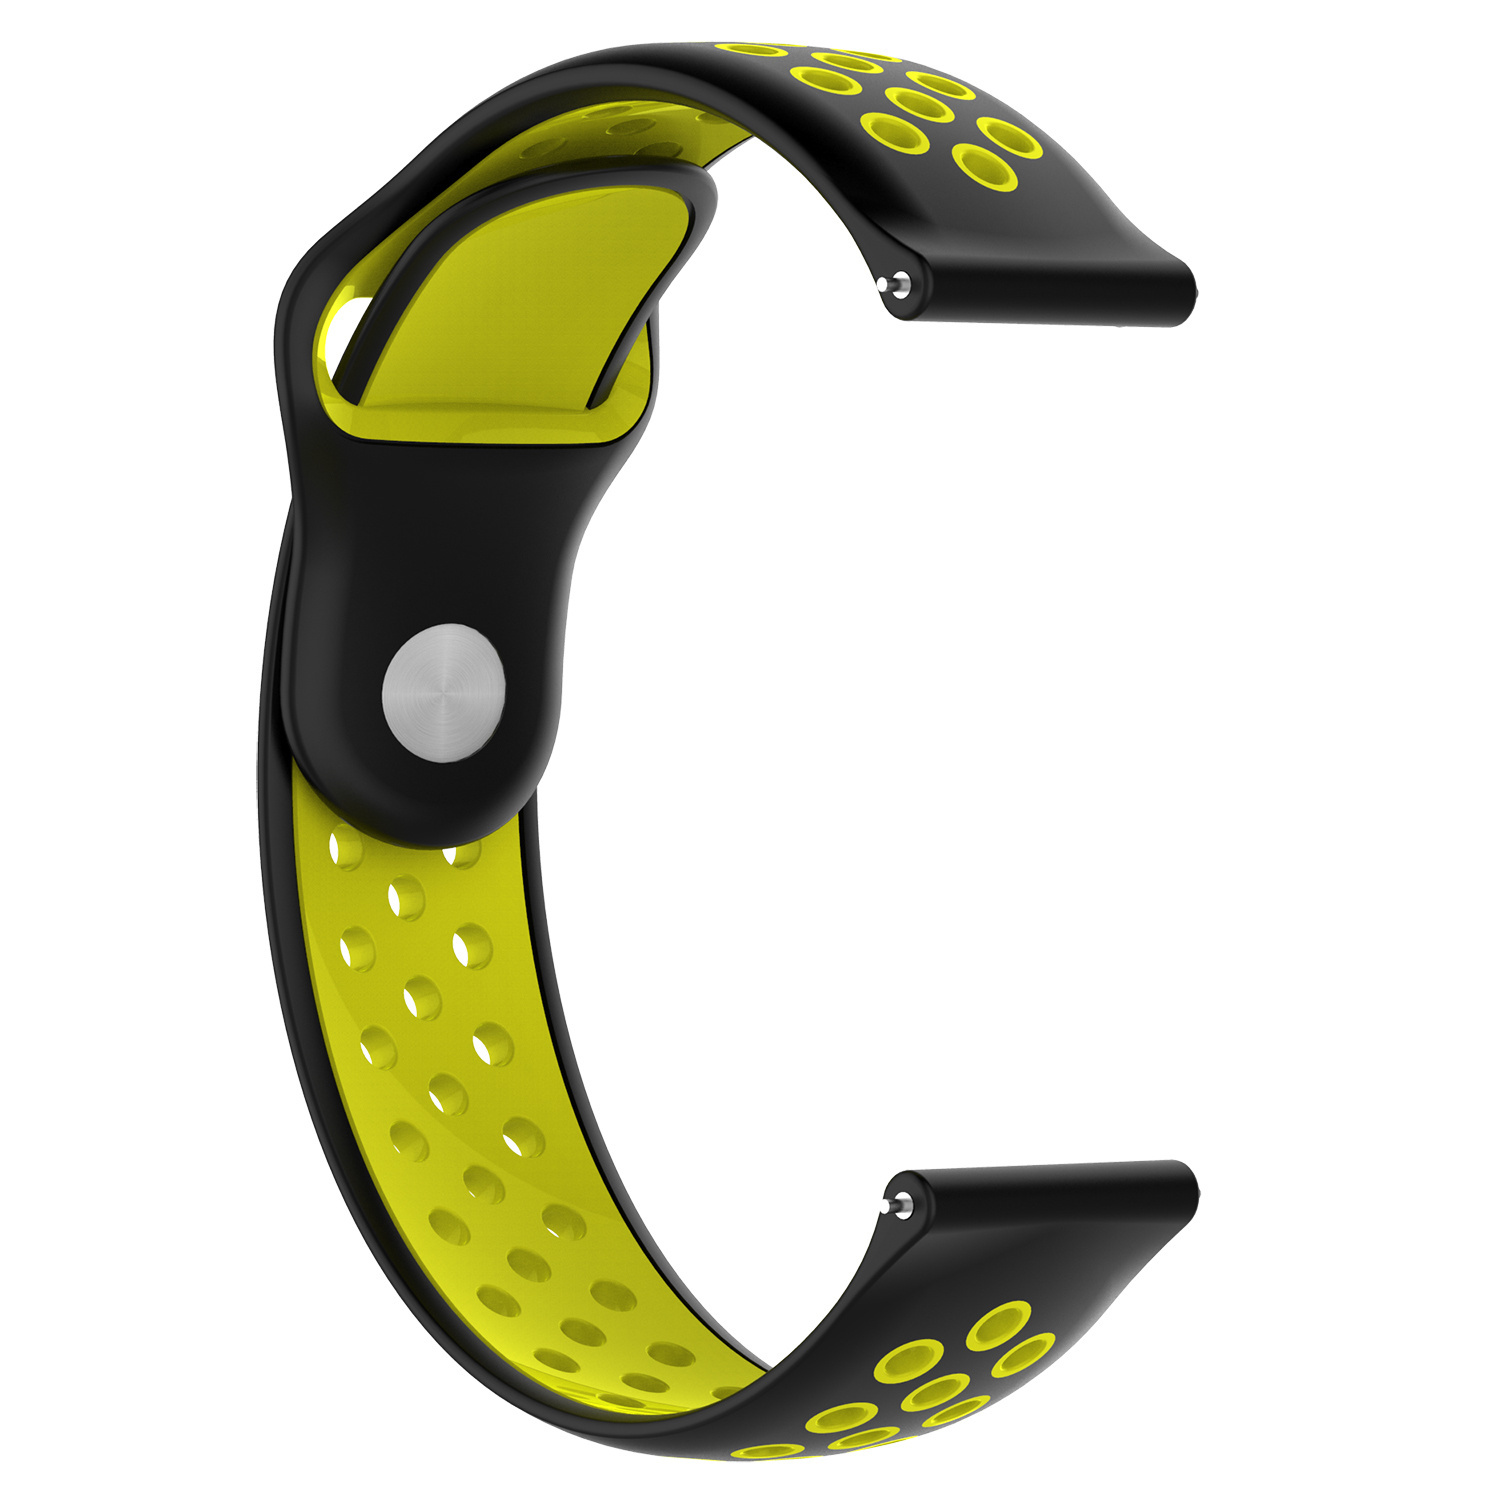 Cinturino doppio sport per Huawei Watch GT - nero giallo